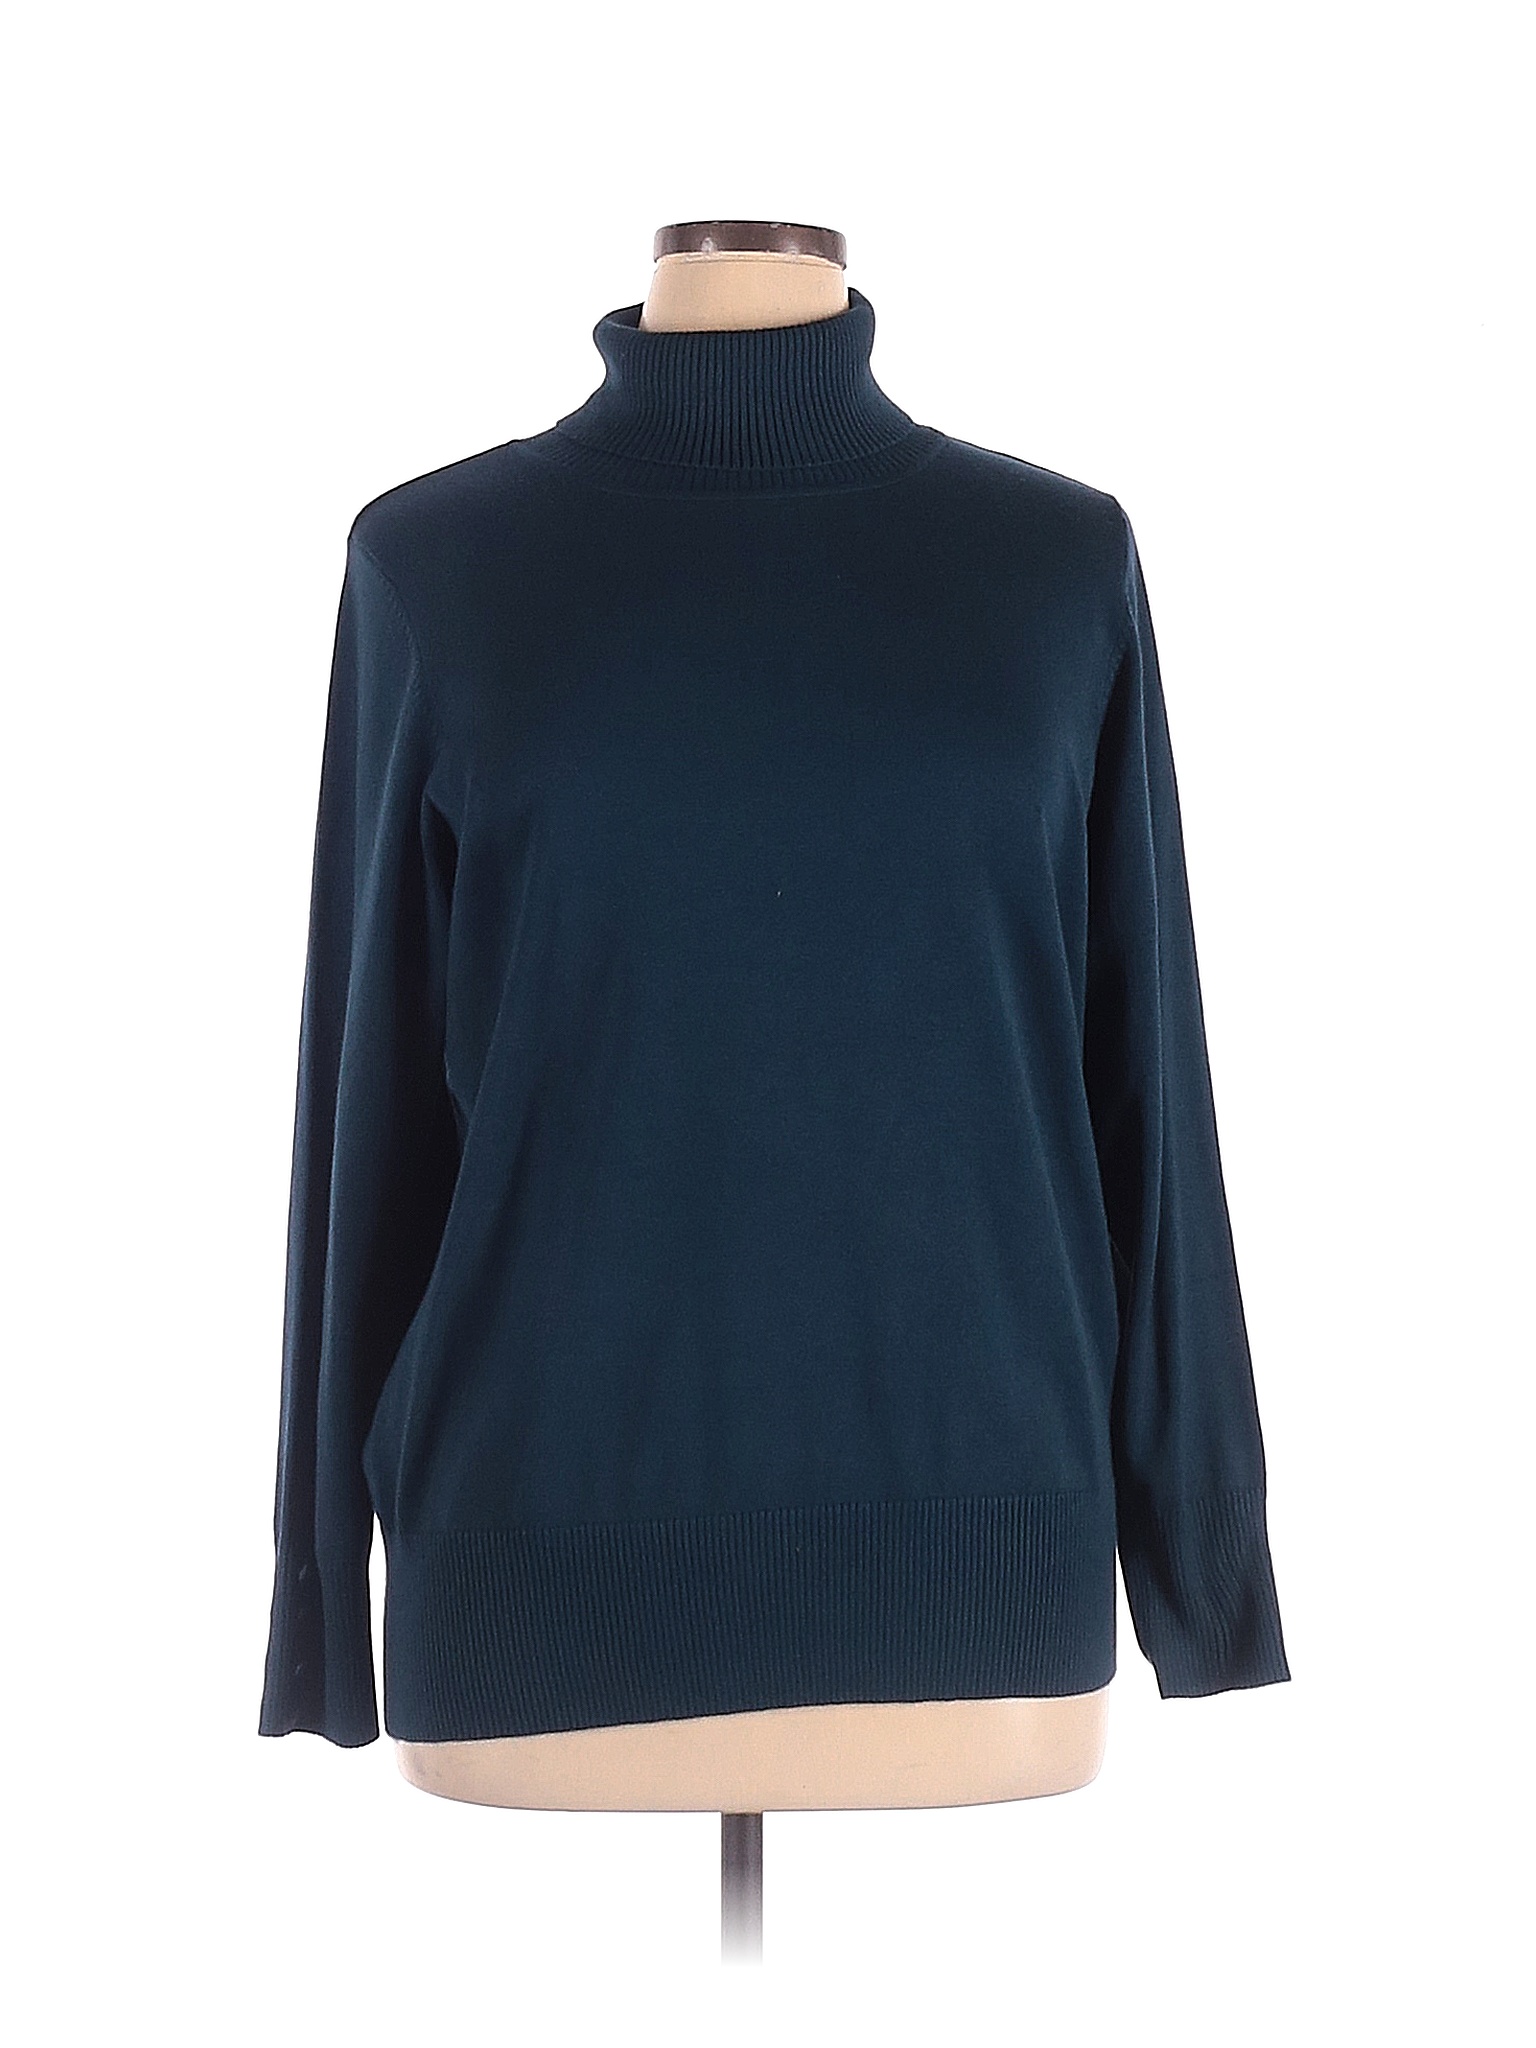 retrology Teal Turtleneck Sweater Size 1X (Plus) - 68% off | thredUP